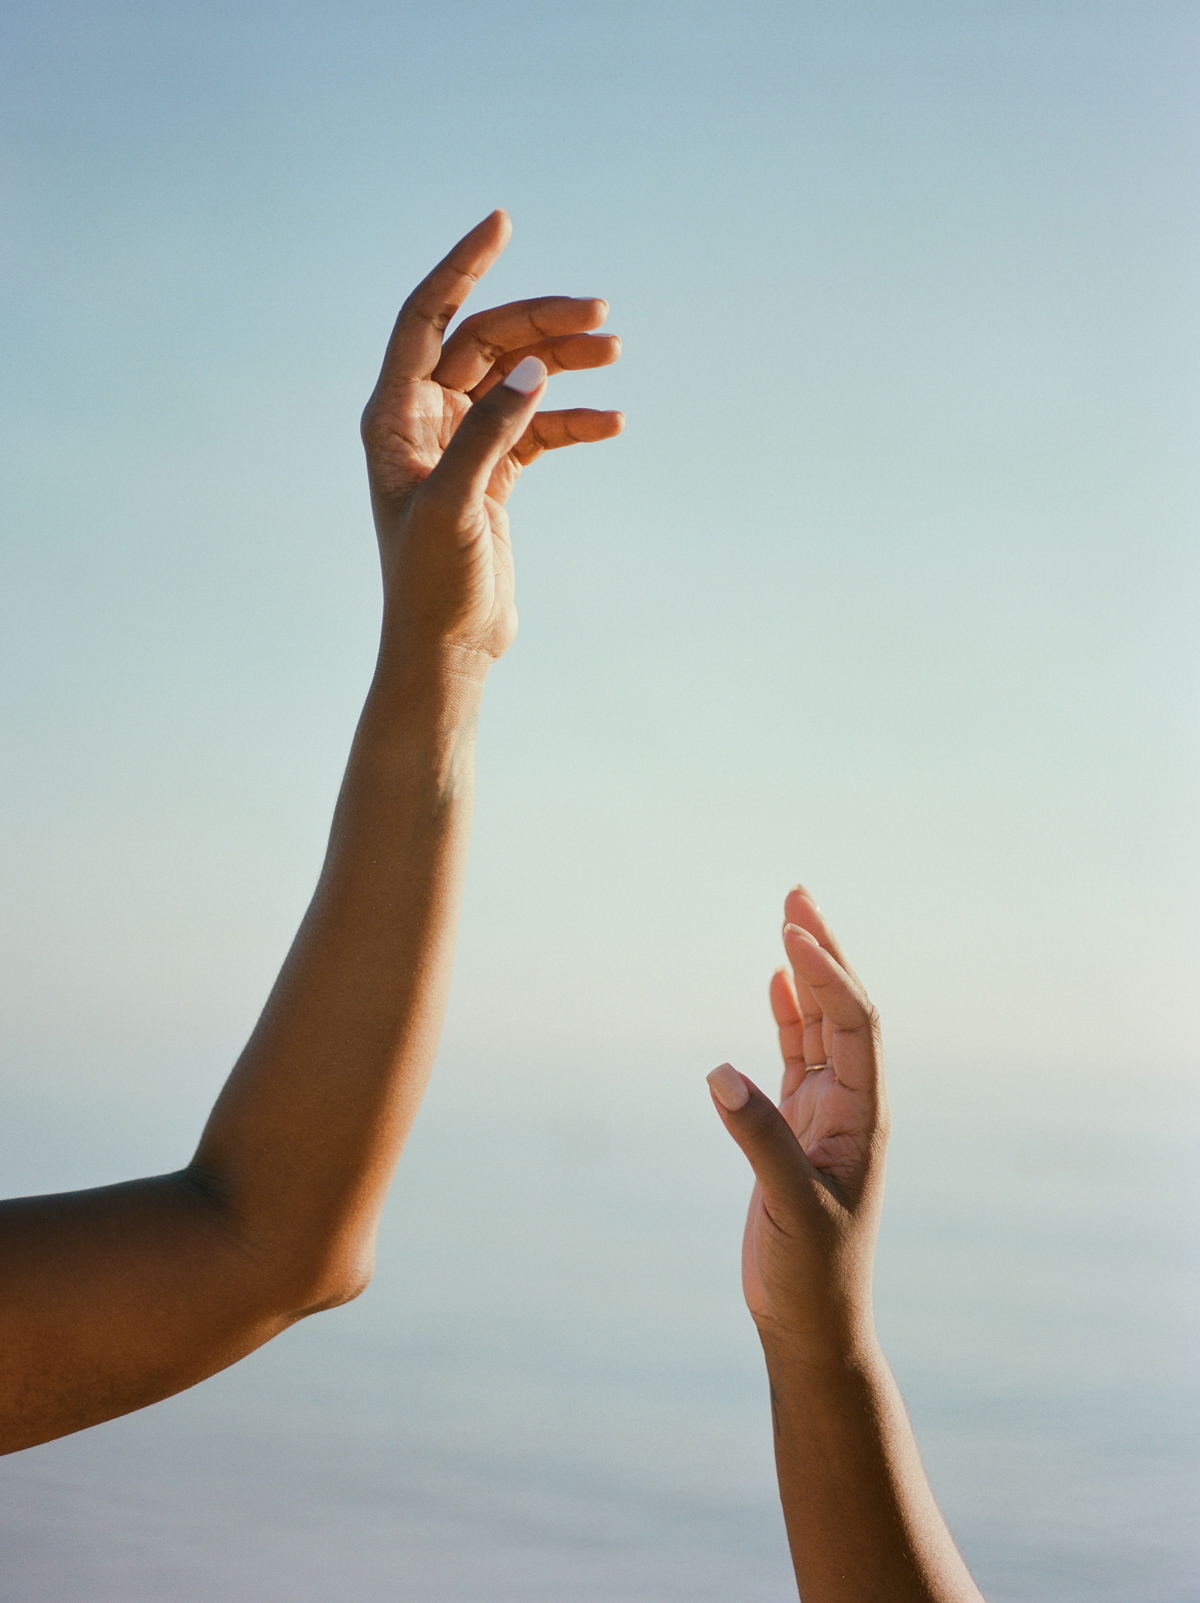 artist image of 2 feminine hands dancing on a sky background